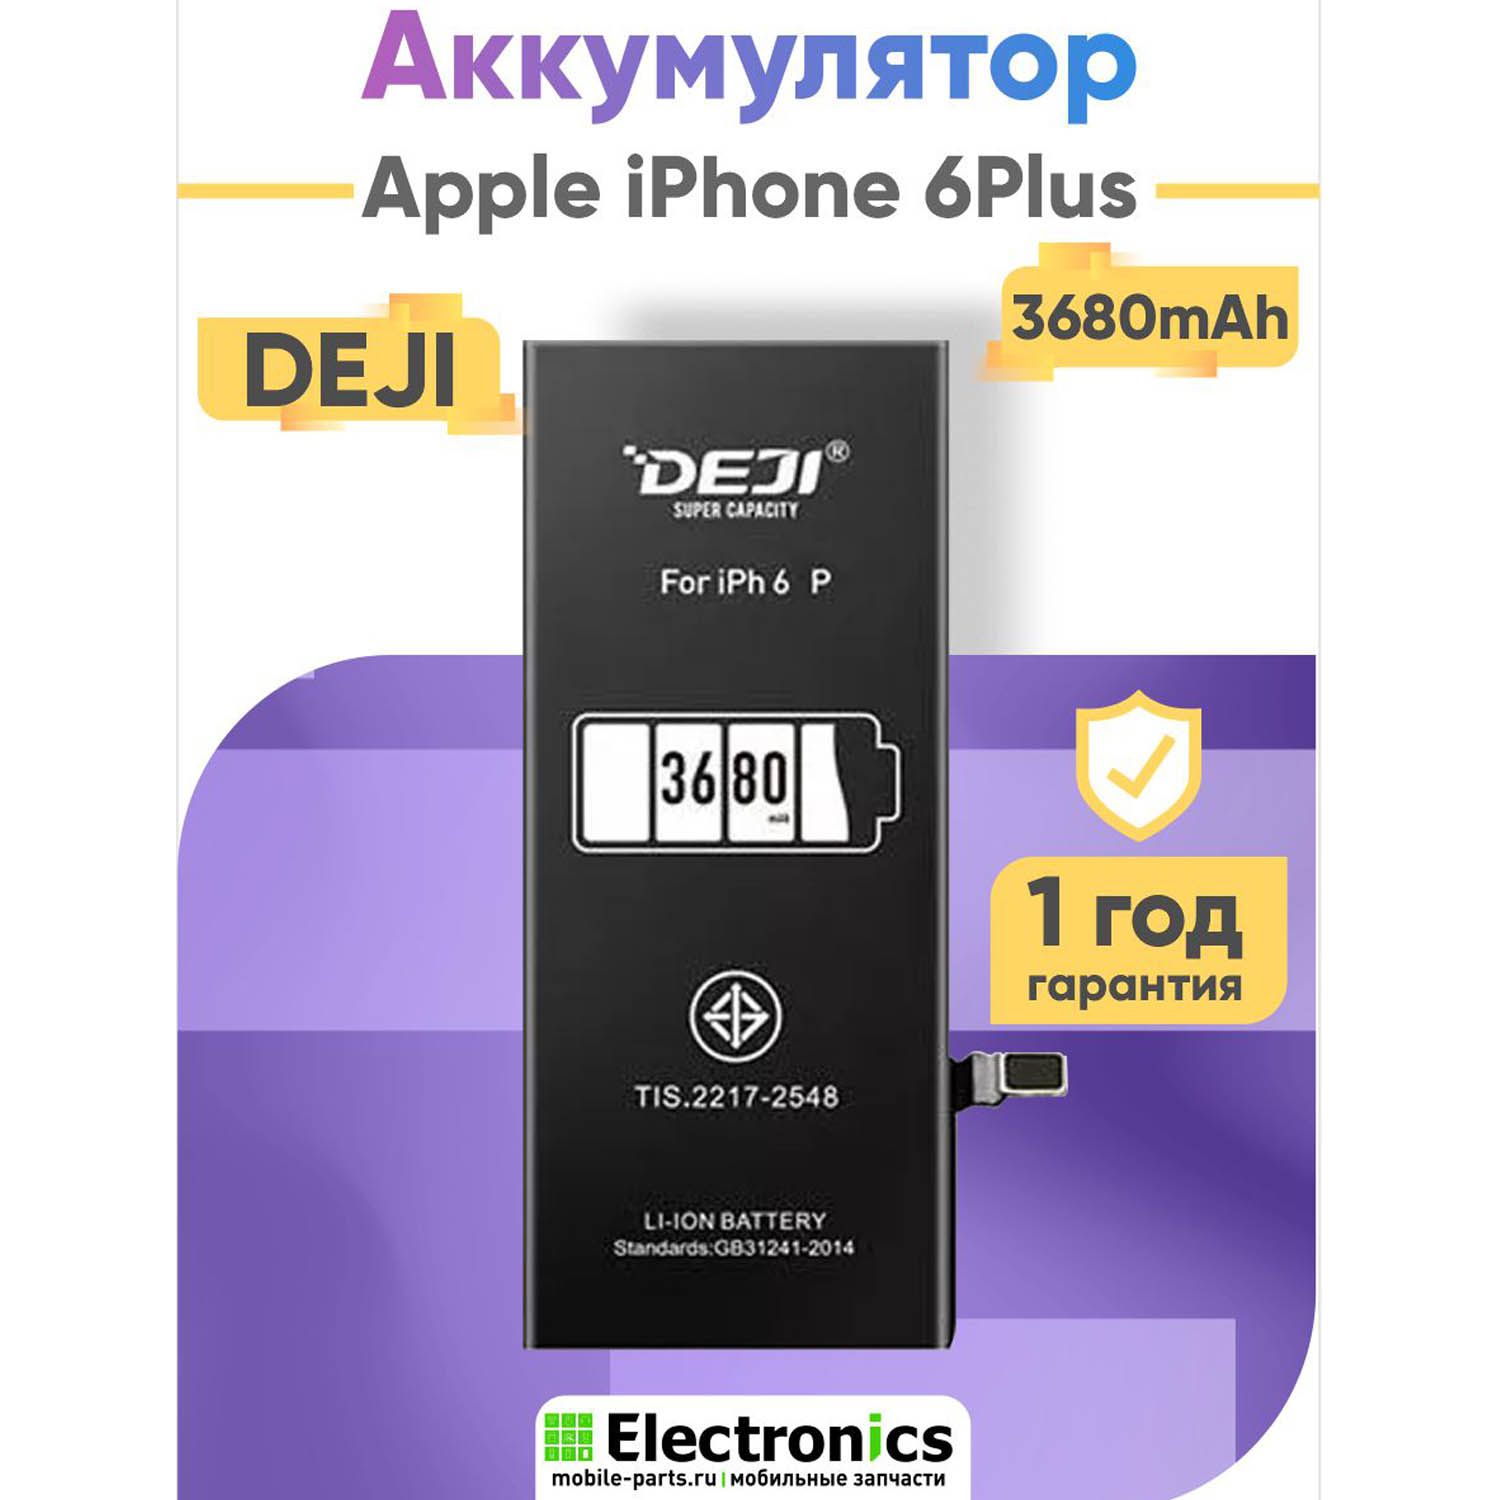 Аккумулятор DEJI Apple iPhone 6 Plus повышенной ёмкости 3680mAh